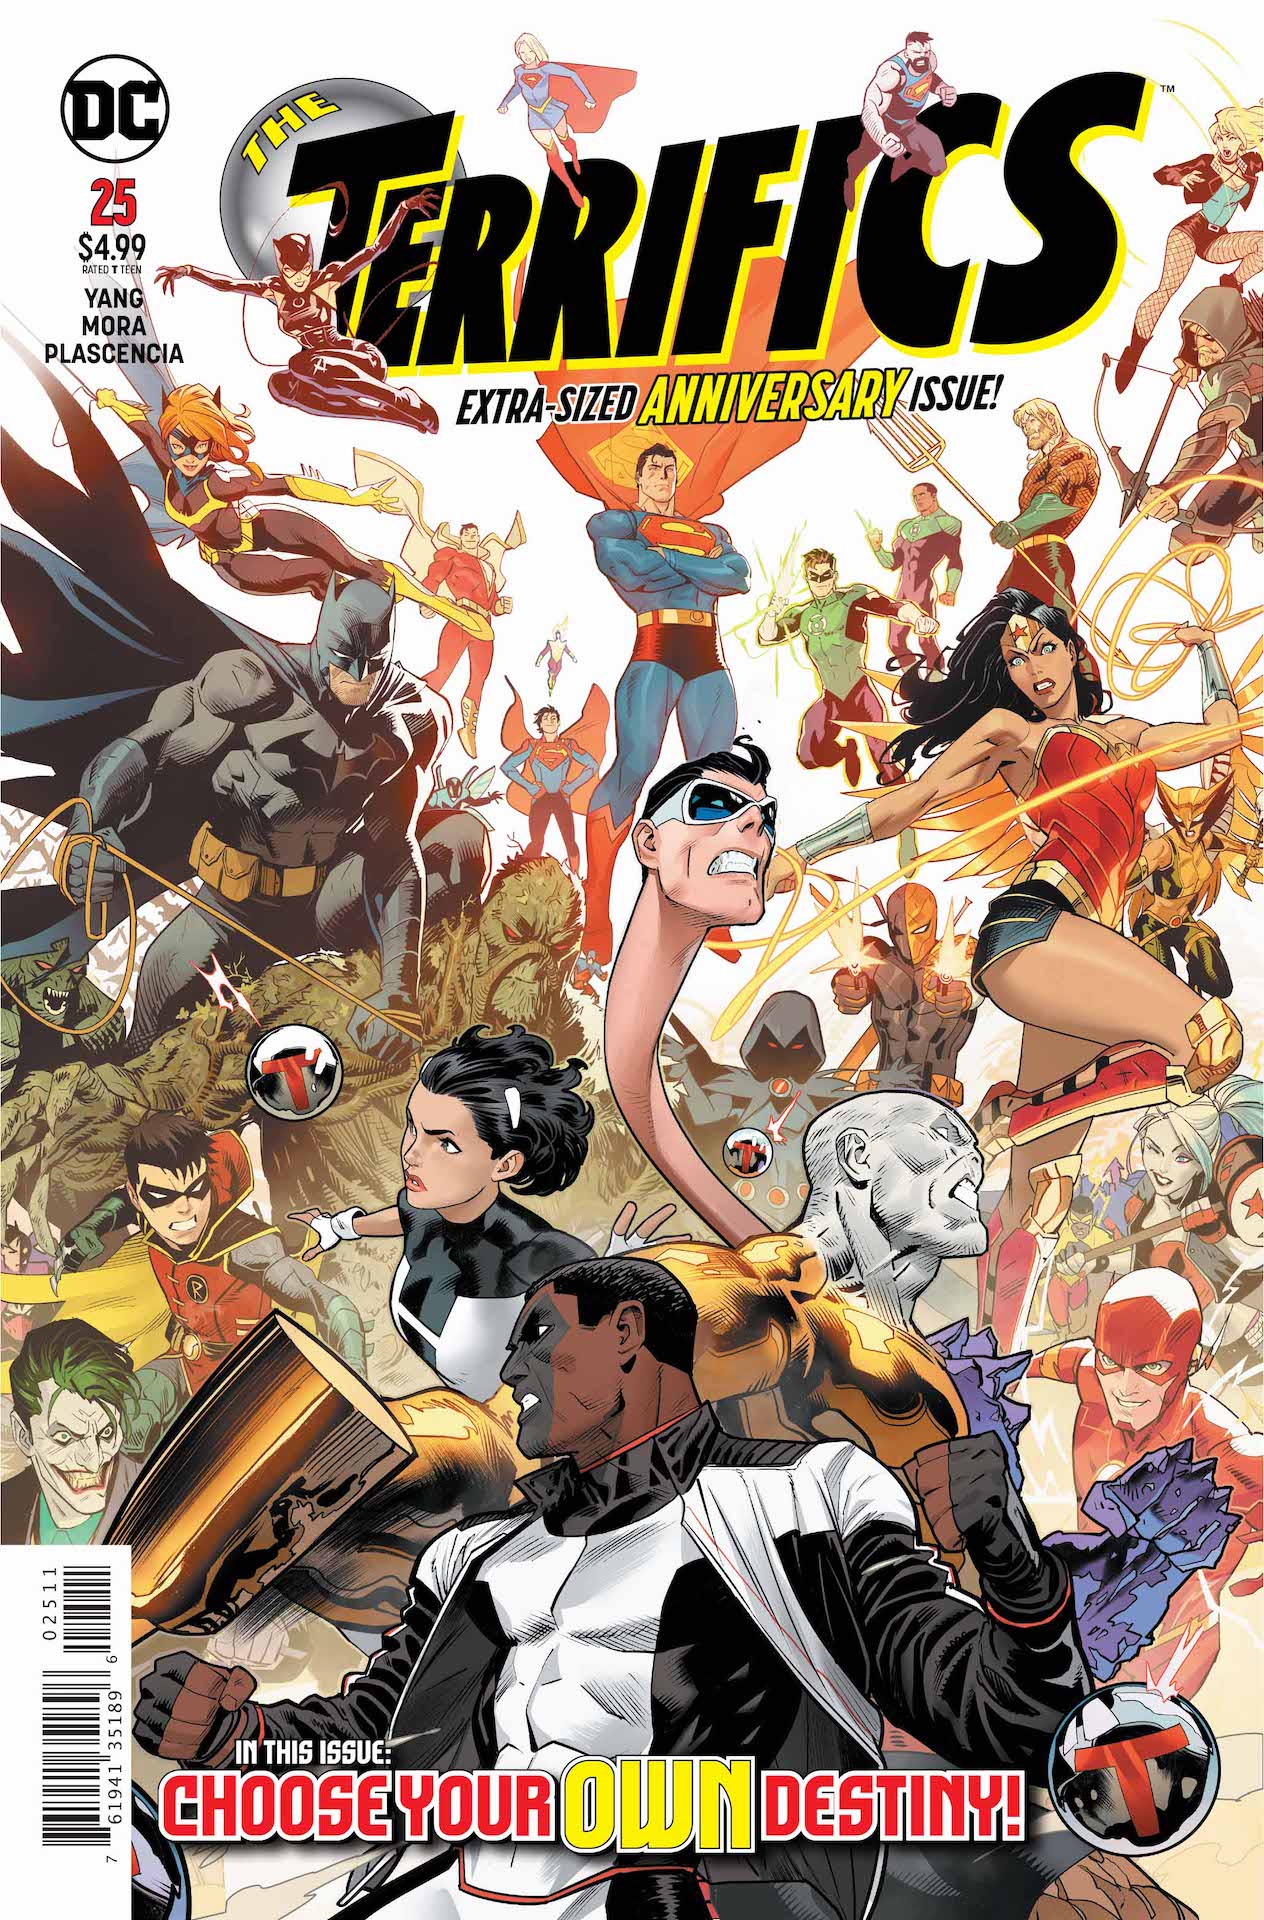 DC Preview: The Terrifics #25